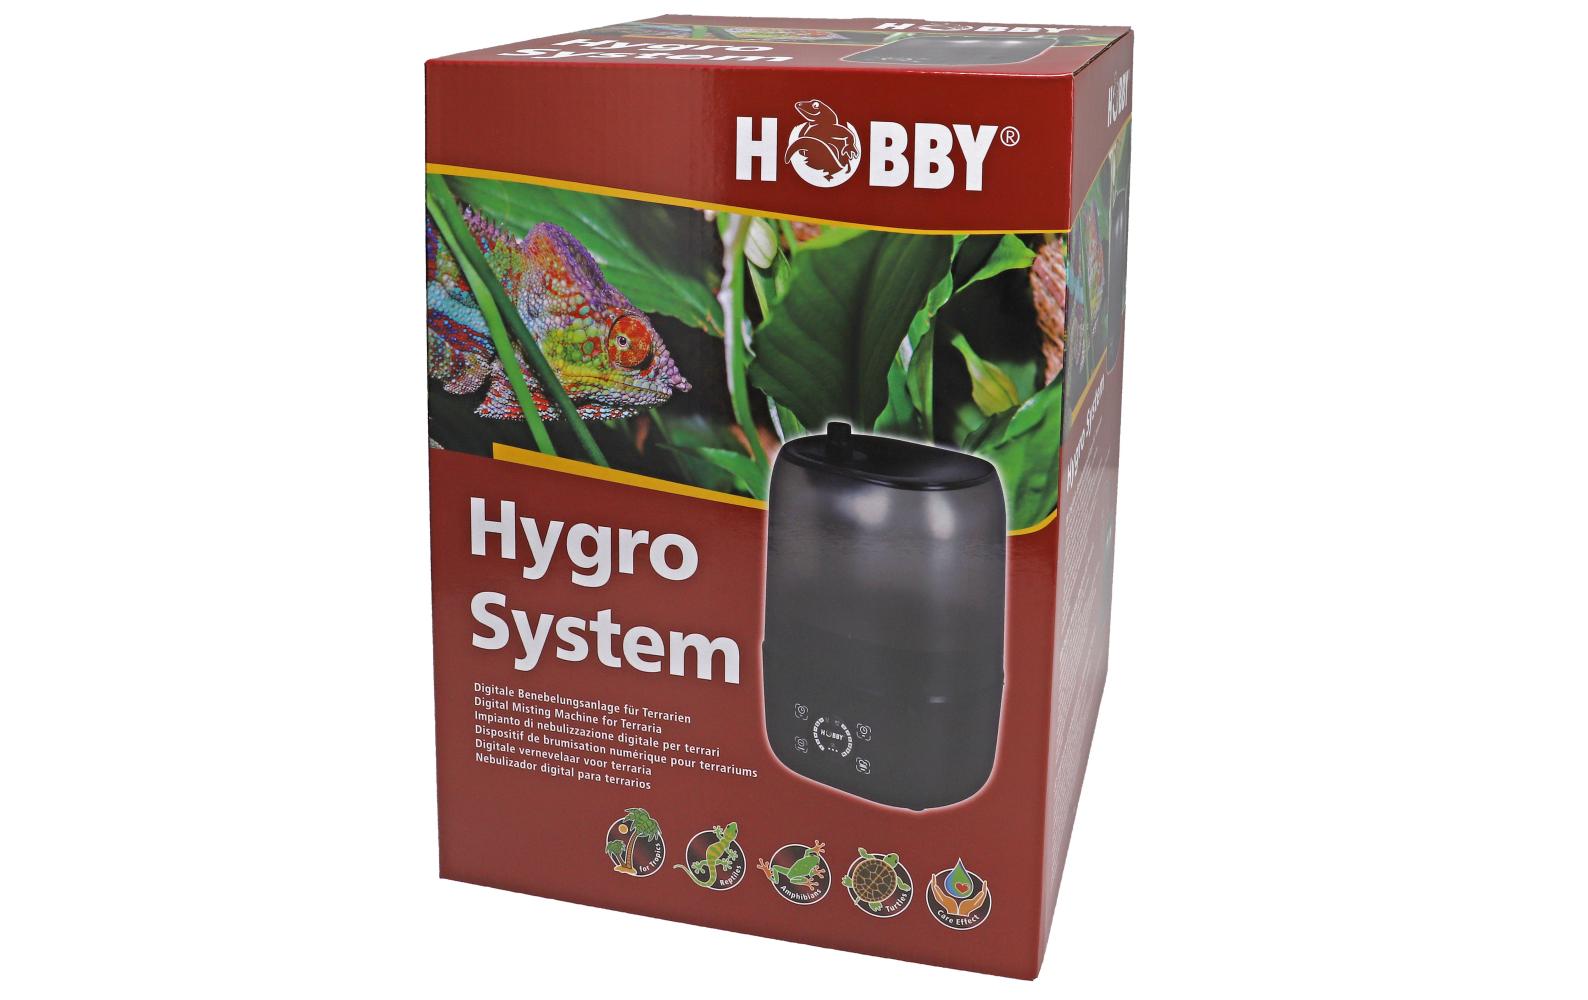 Hobby Terraristik Verneblungssystem Hygro System, 4 l, 16 x 20 x 30 cm